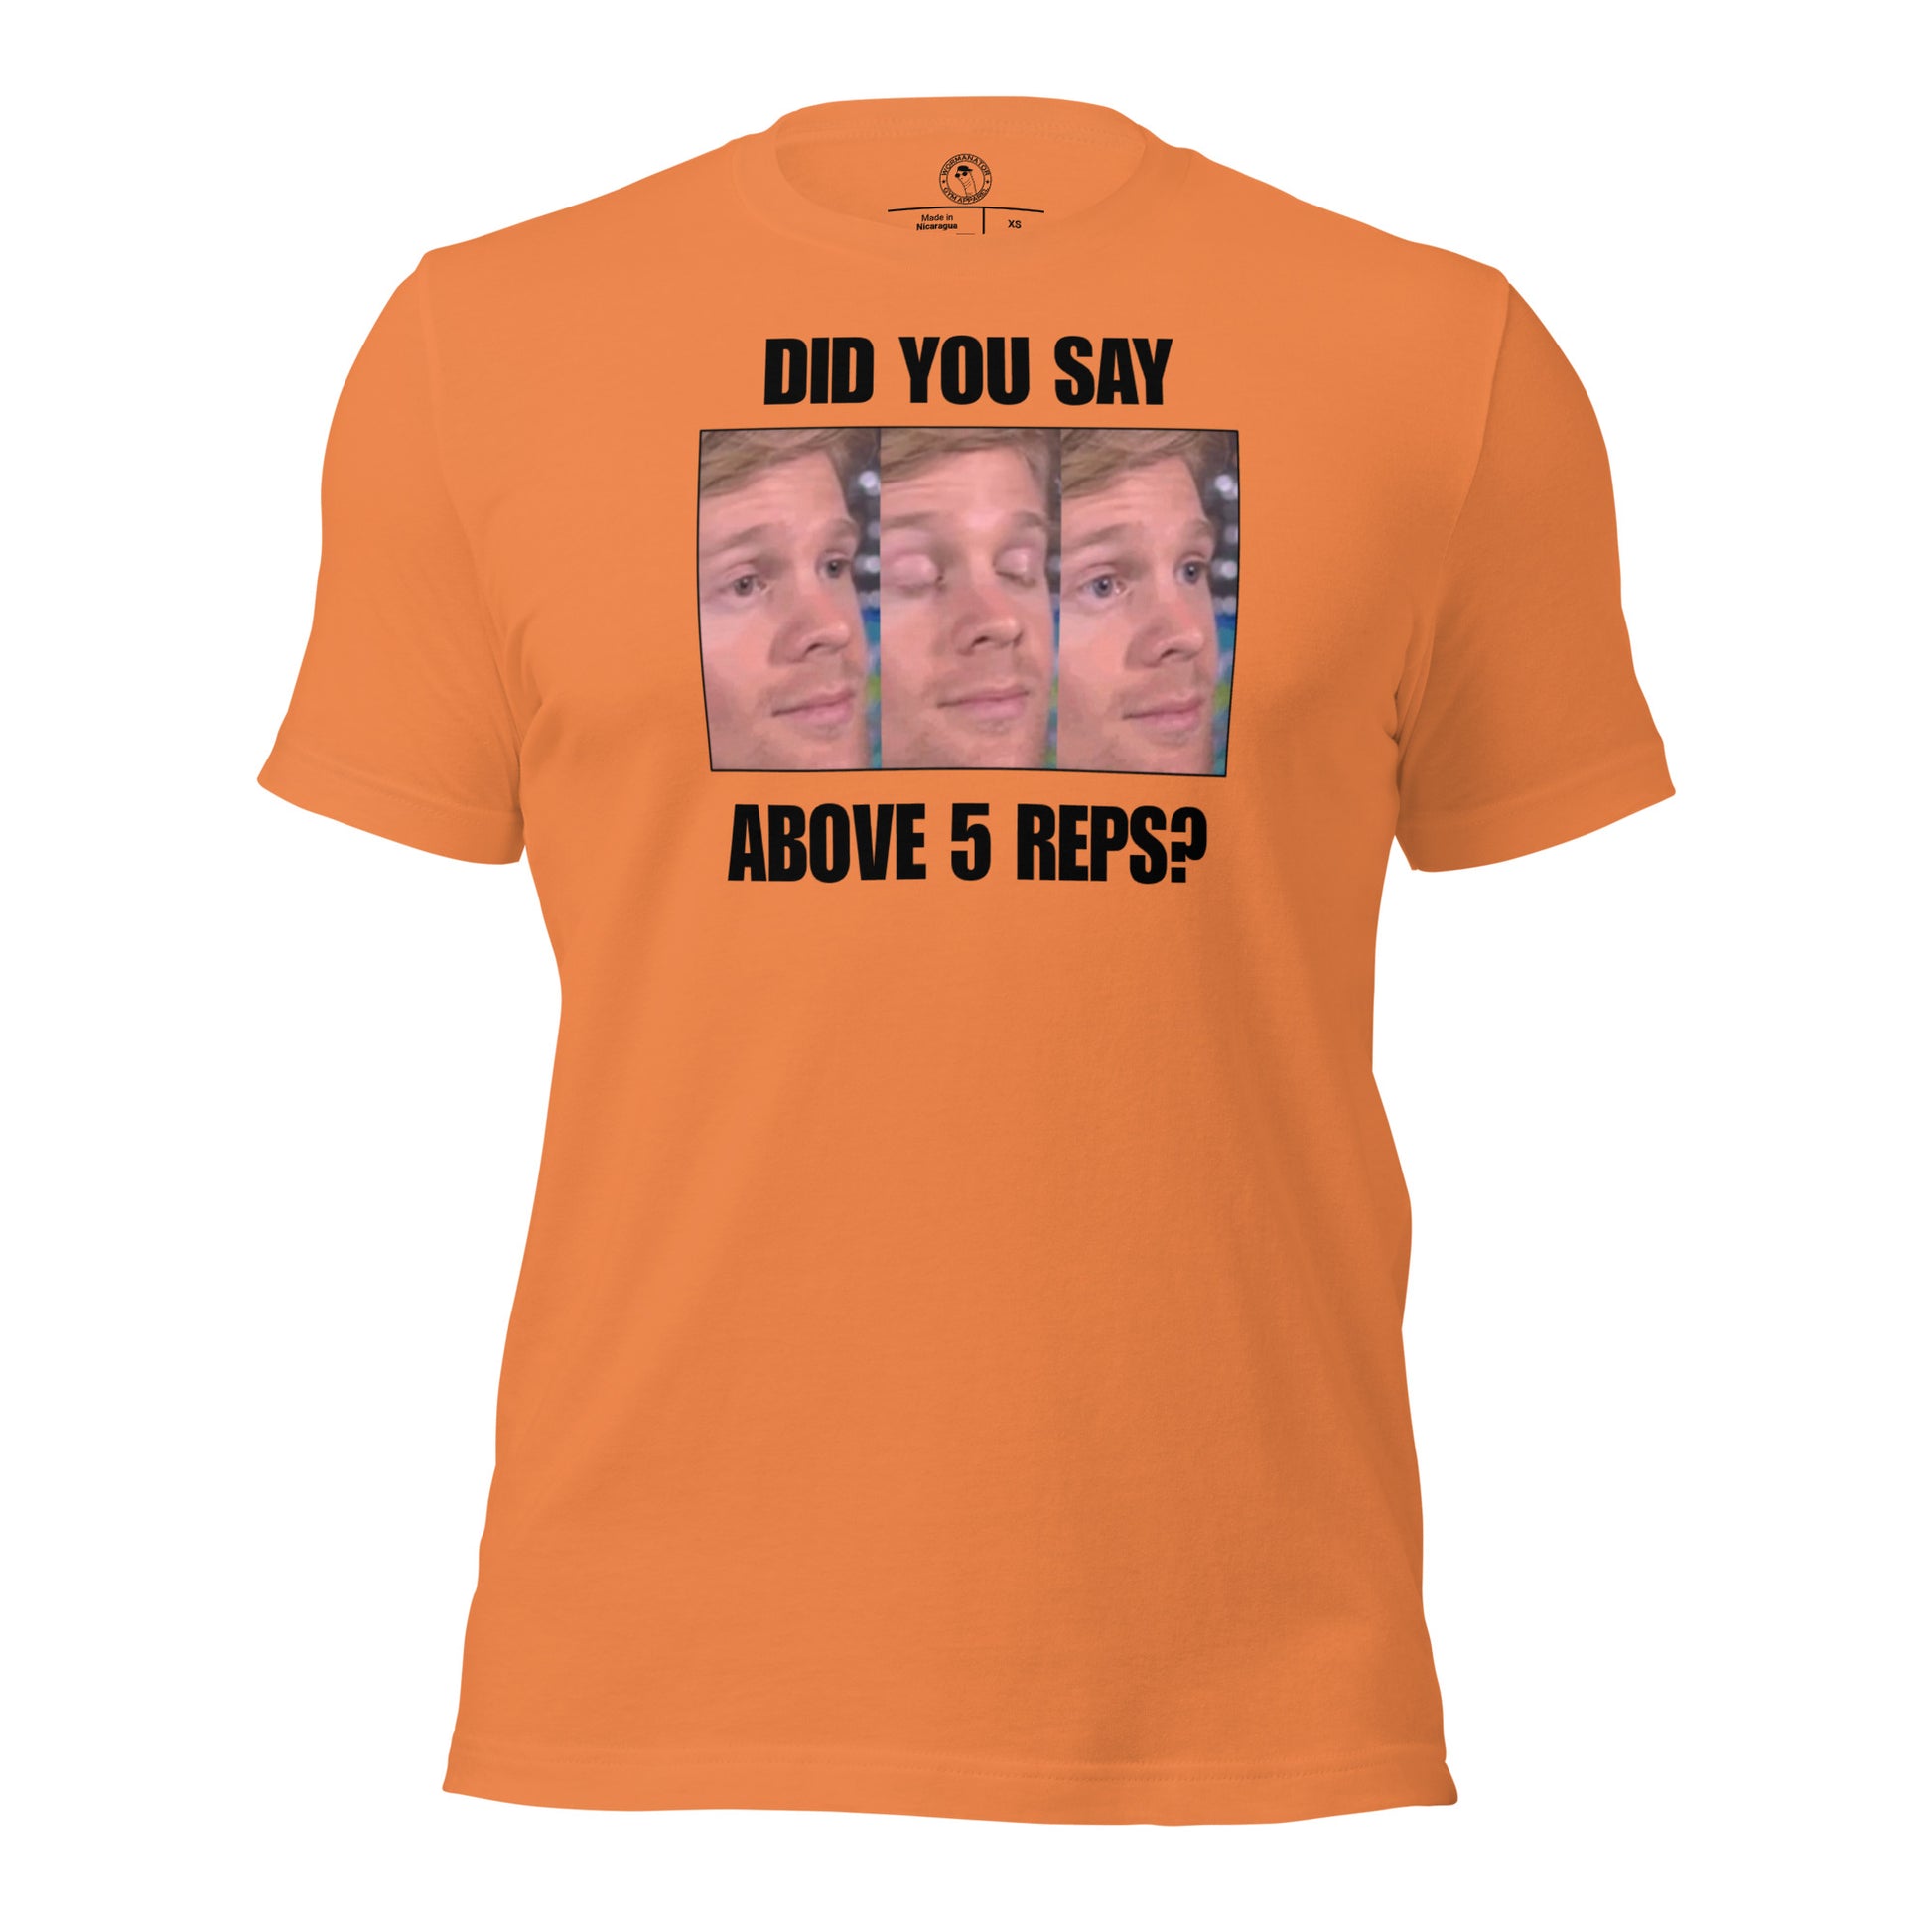 Above 5 Reps is Cardio Shirt in Burnt Orange